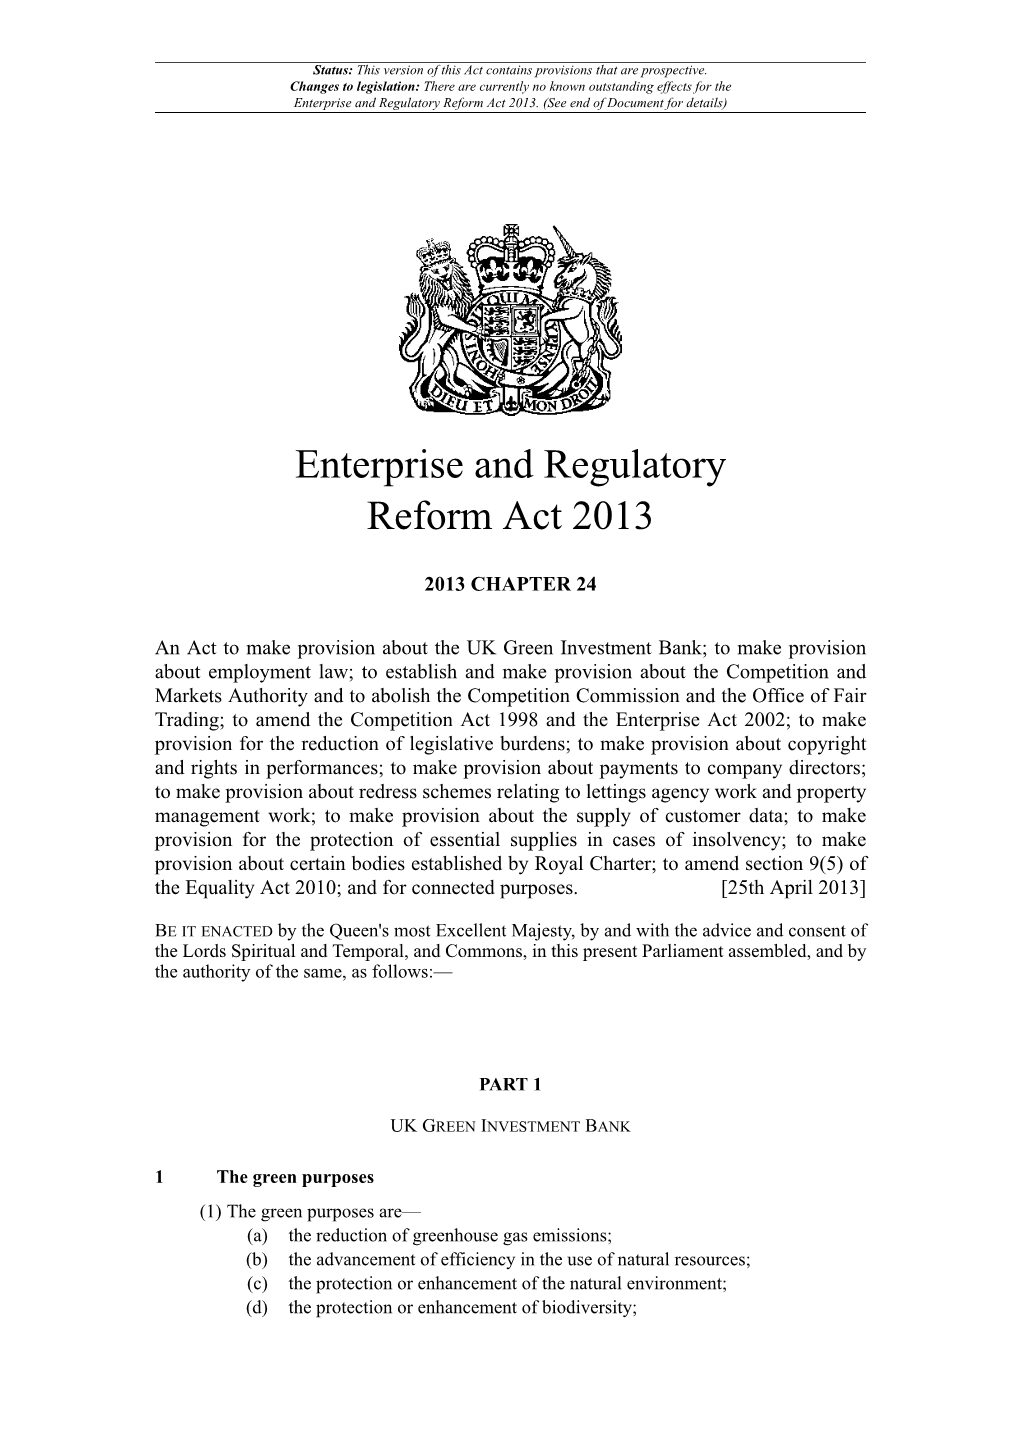 Enterprise and Regulatory Reform Act 2013